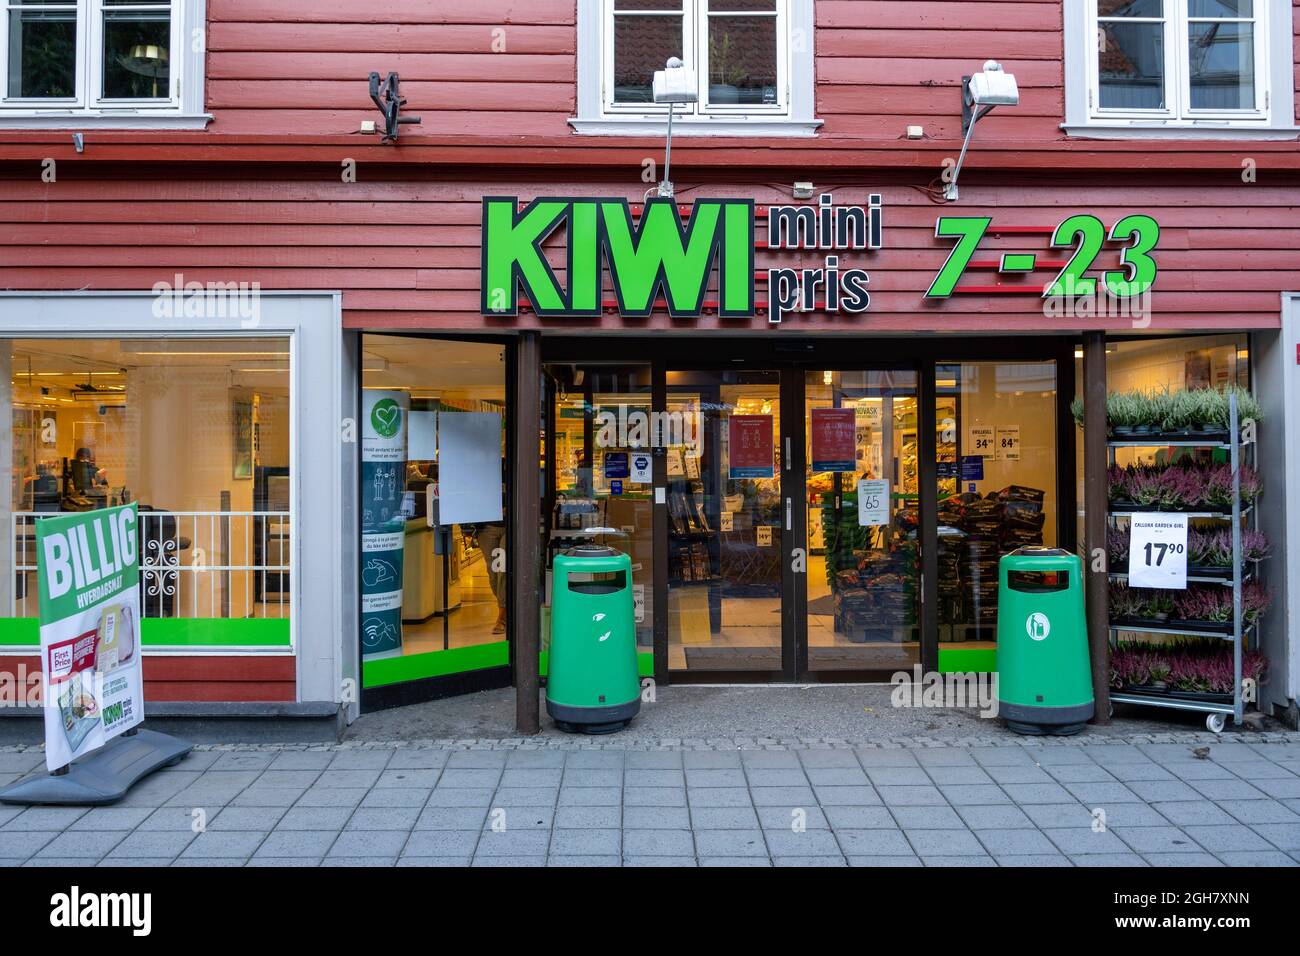 Kiwi Mini Pris supermarket in Lillehammer, Norway, Europe Stock Photo